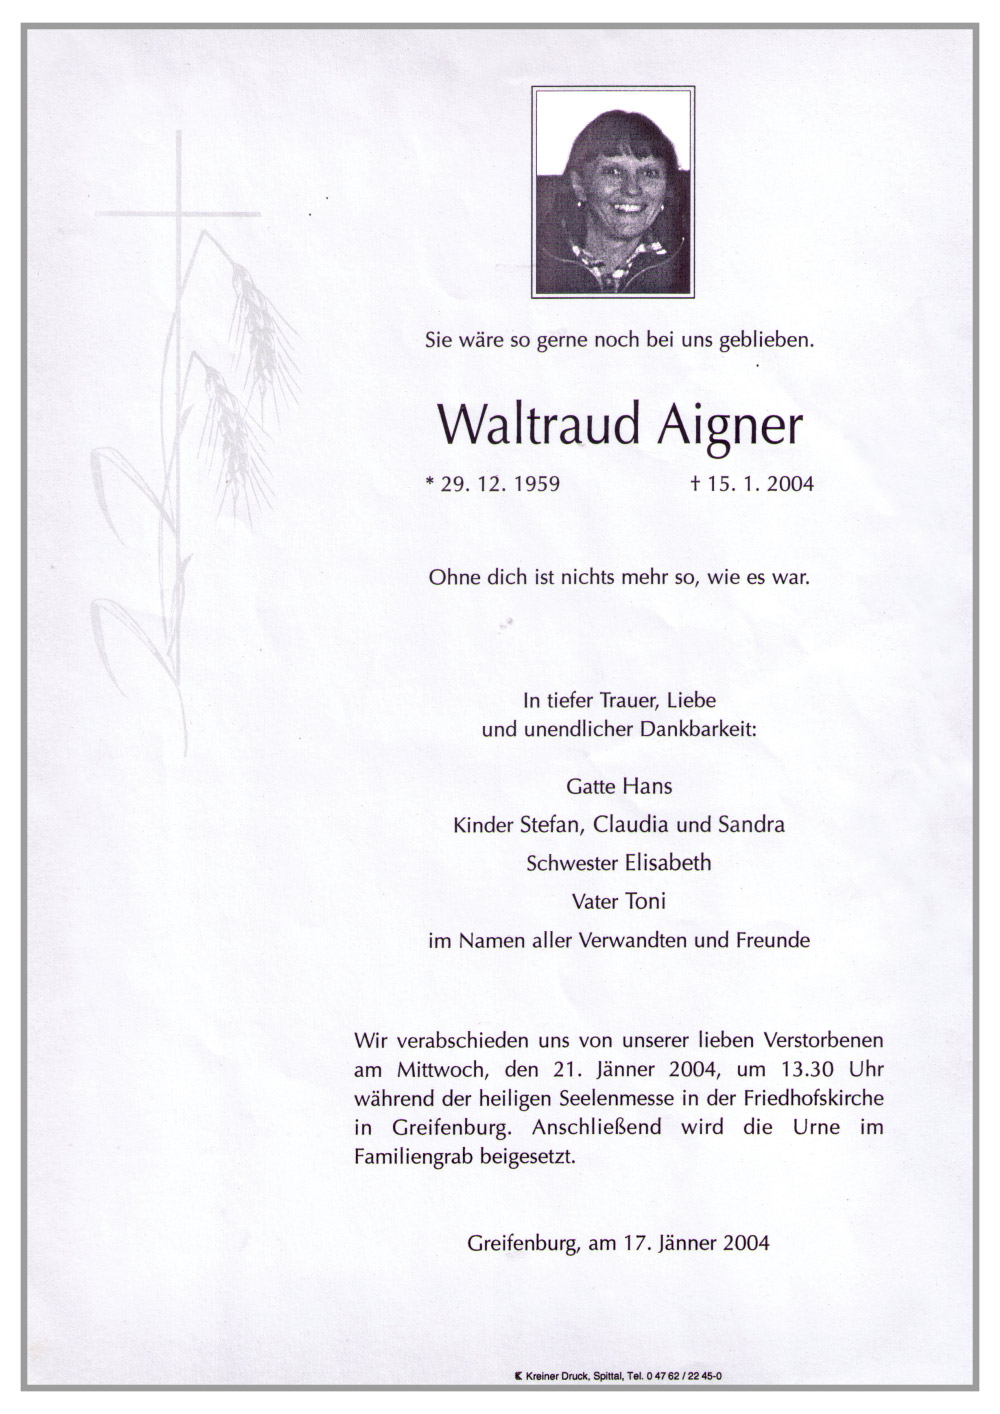 Waltraud Aigner